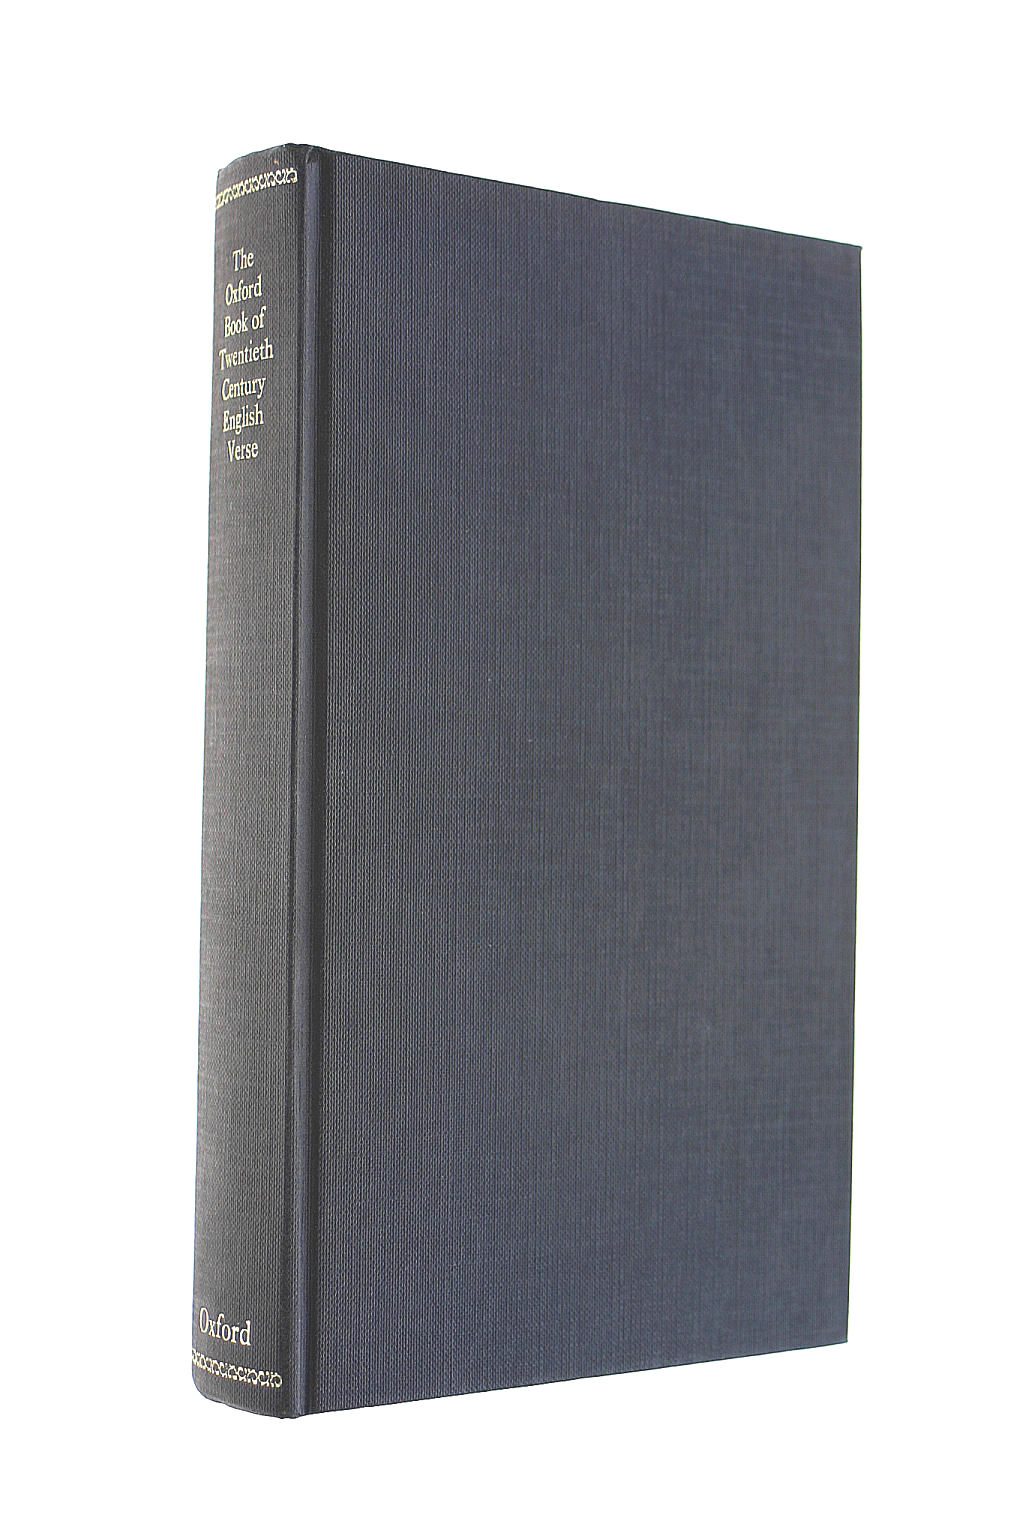 LARKIN, PHILIP [EDITOR]; MOTION, ANDREW [FOREWORD]; - The Oxford Book of Twentieth Century English Verse (Oxford Books of Verse)